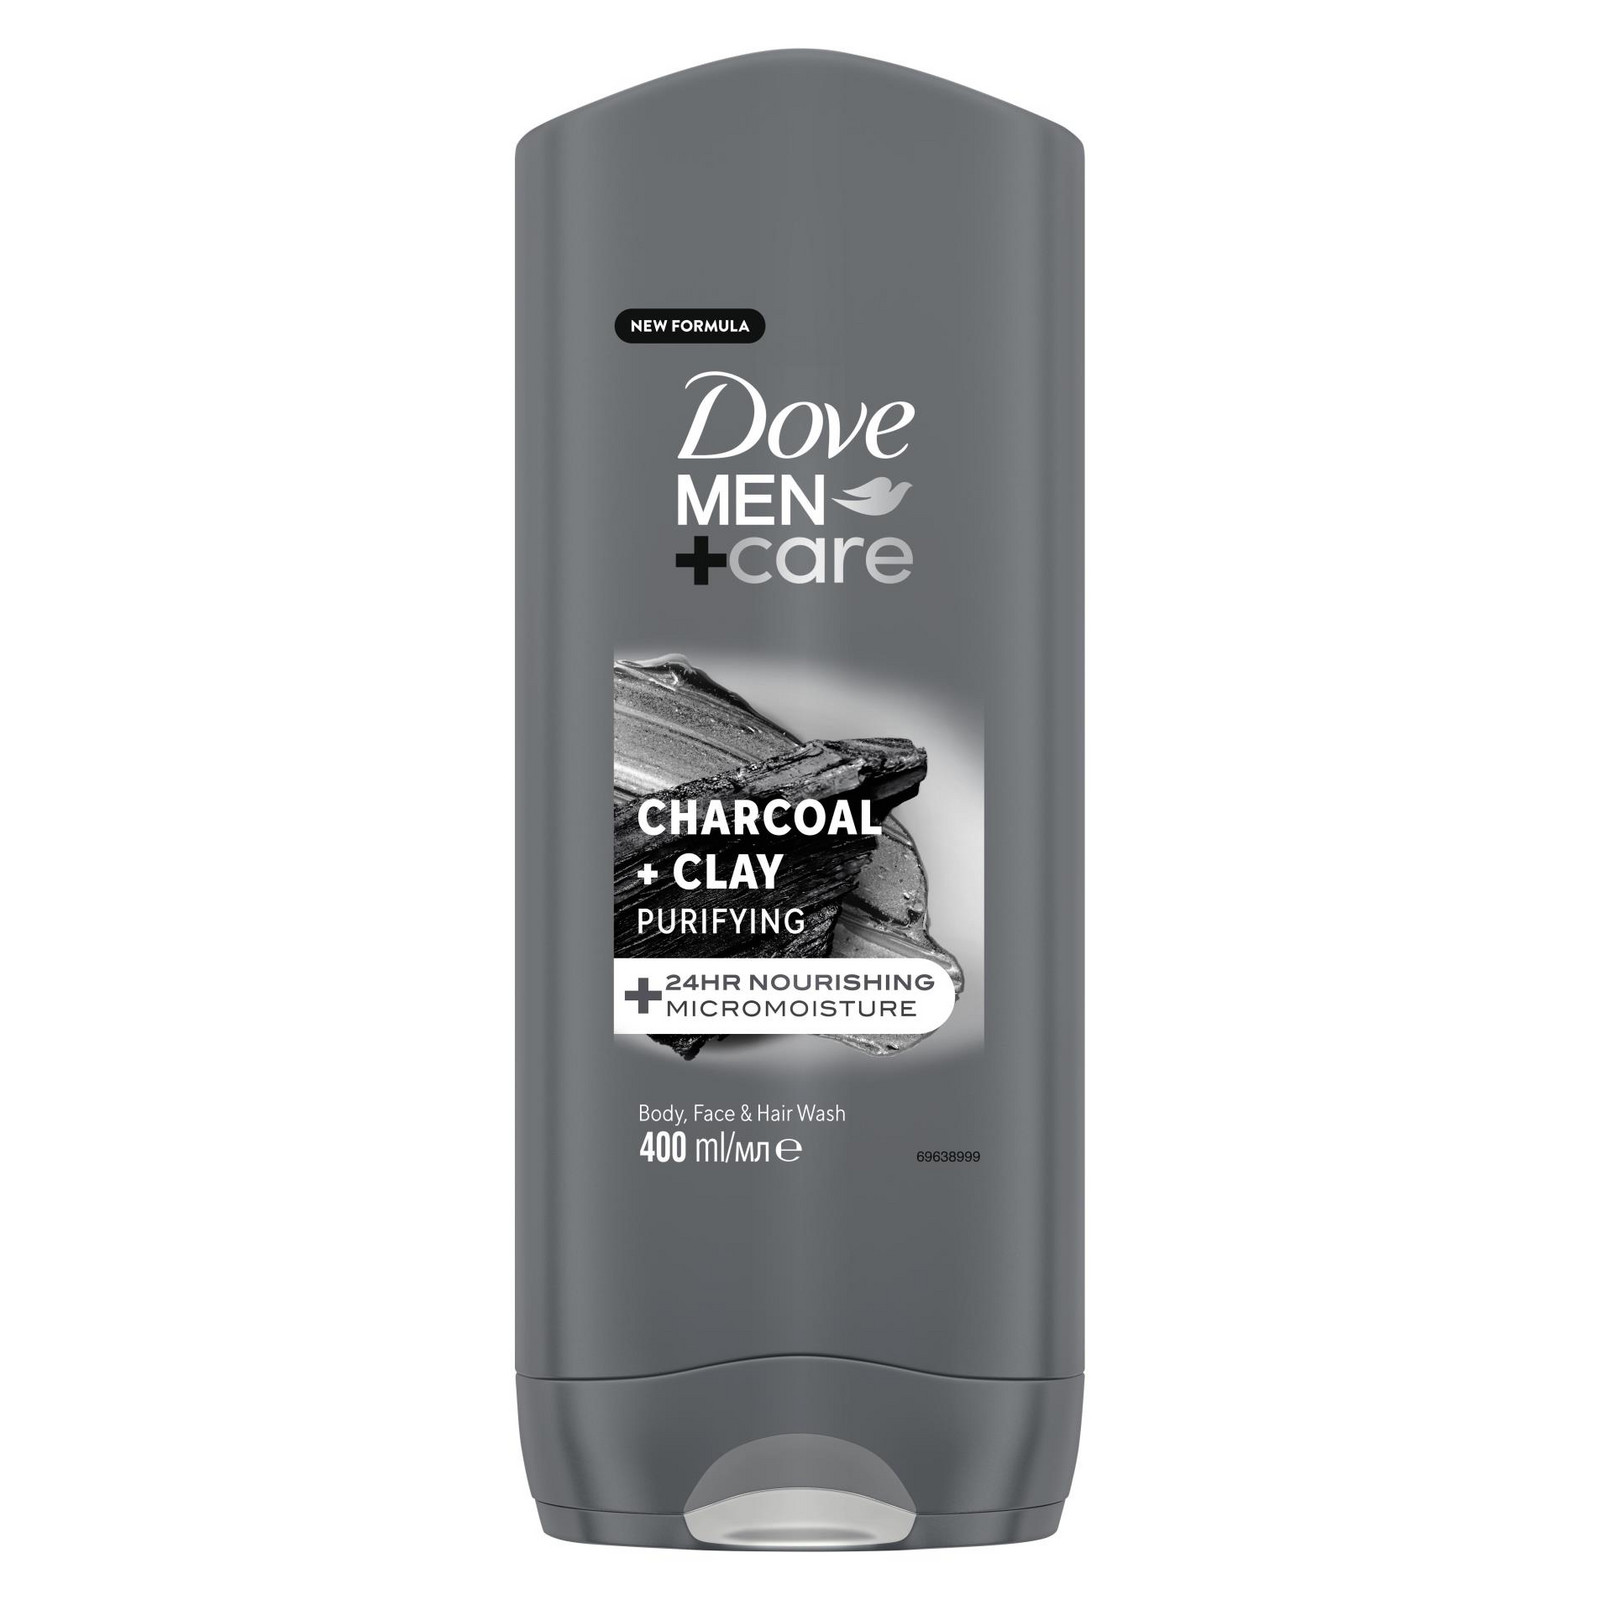 Sprchový gel Dove pro muže - Men+ care,  250 ml